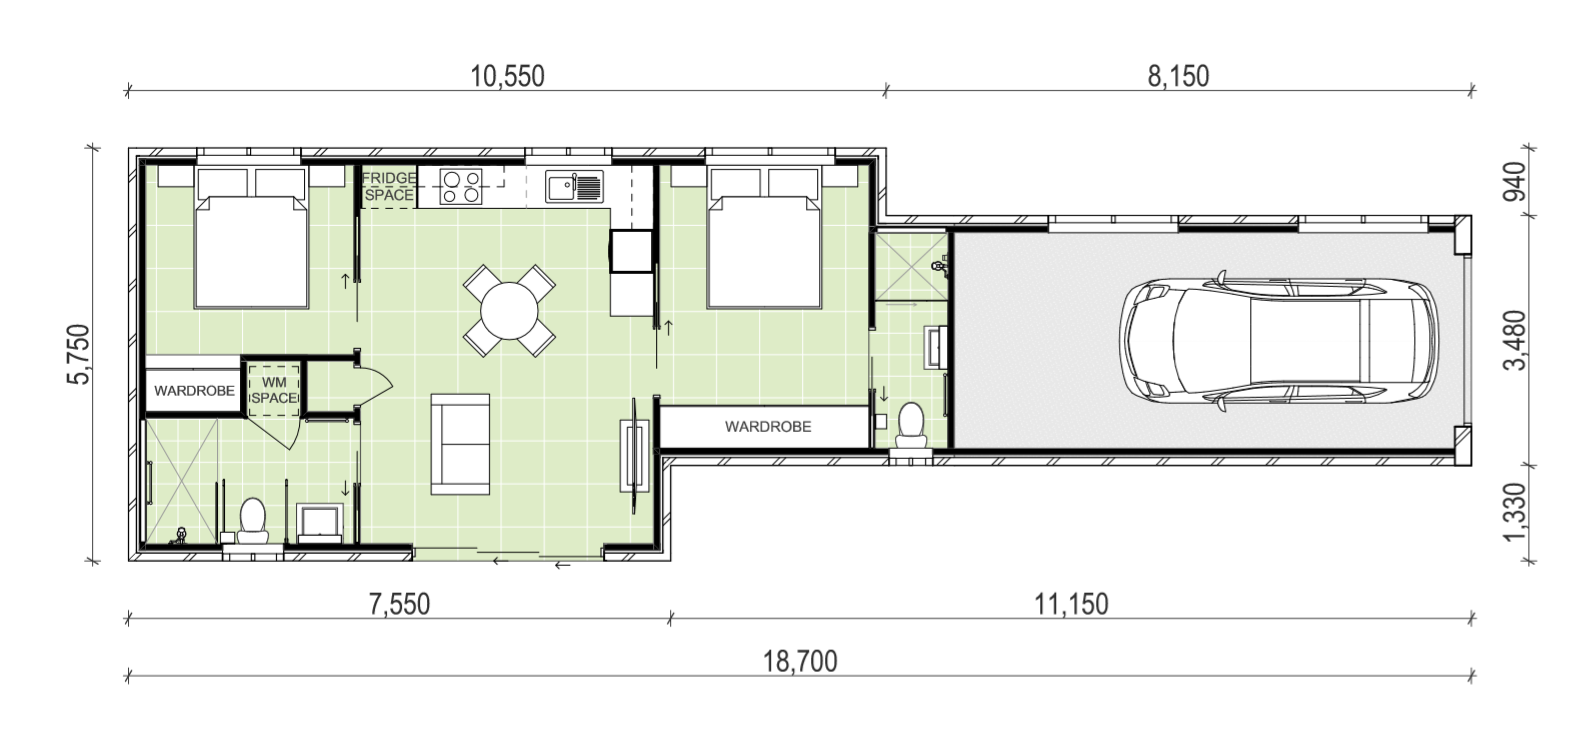 Two bedroom, two bathroom granny flat floor plan with carport